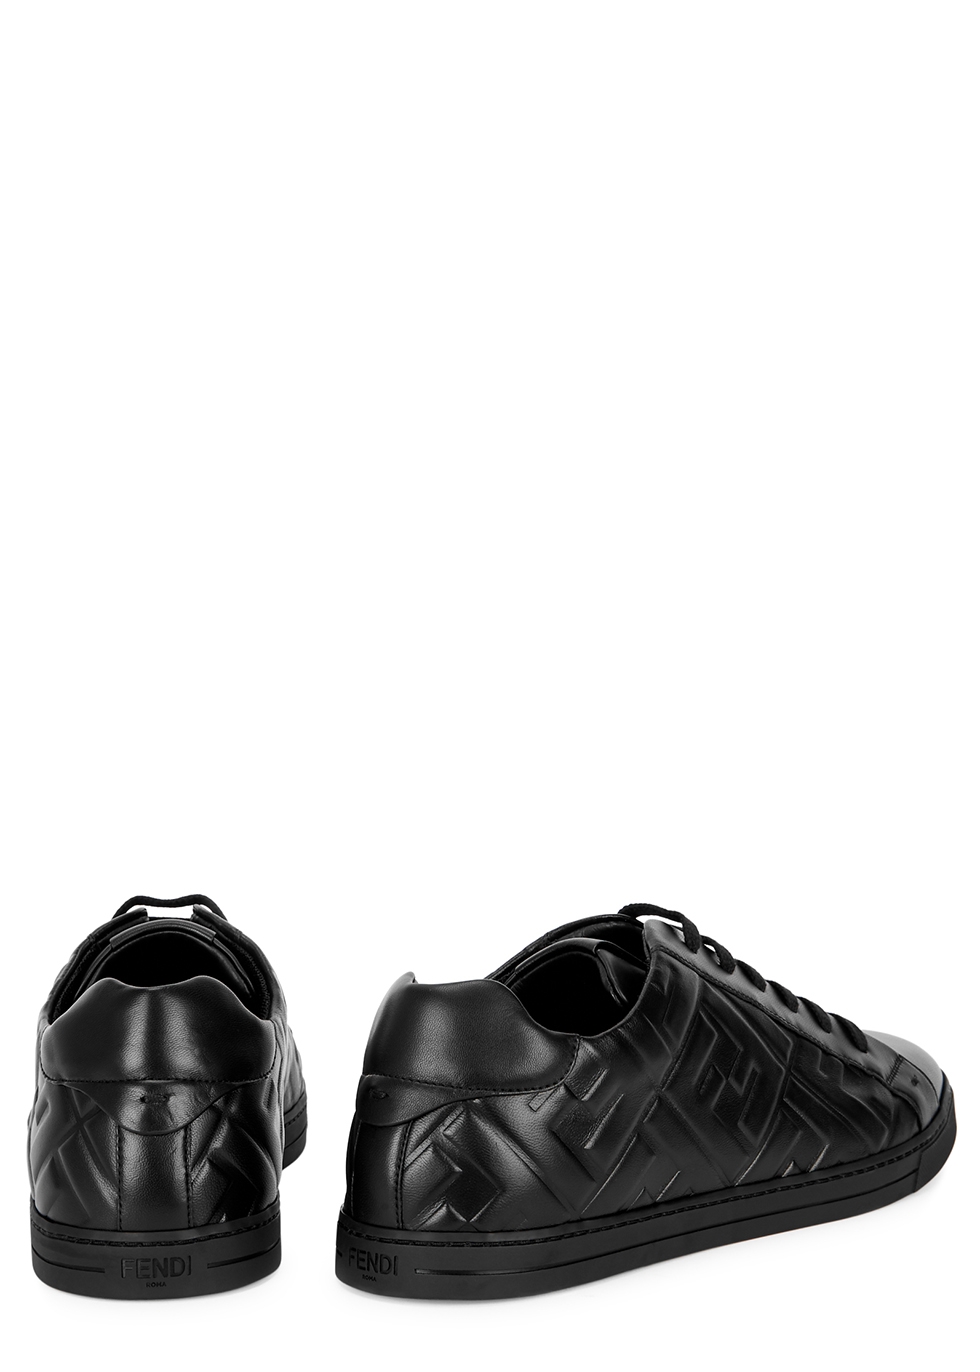 fendi sneakers black